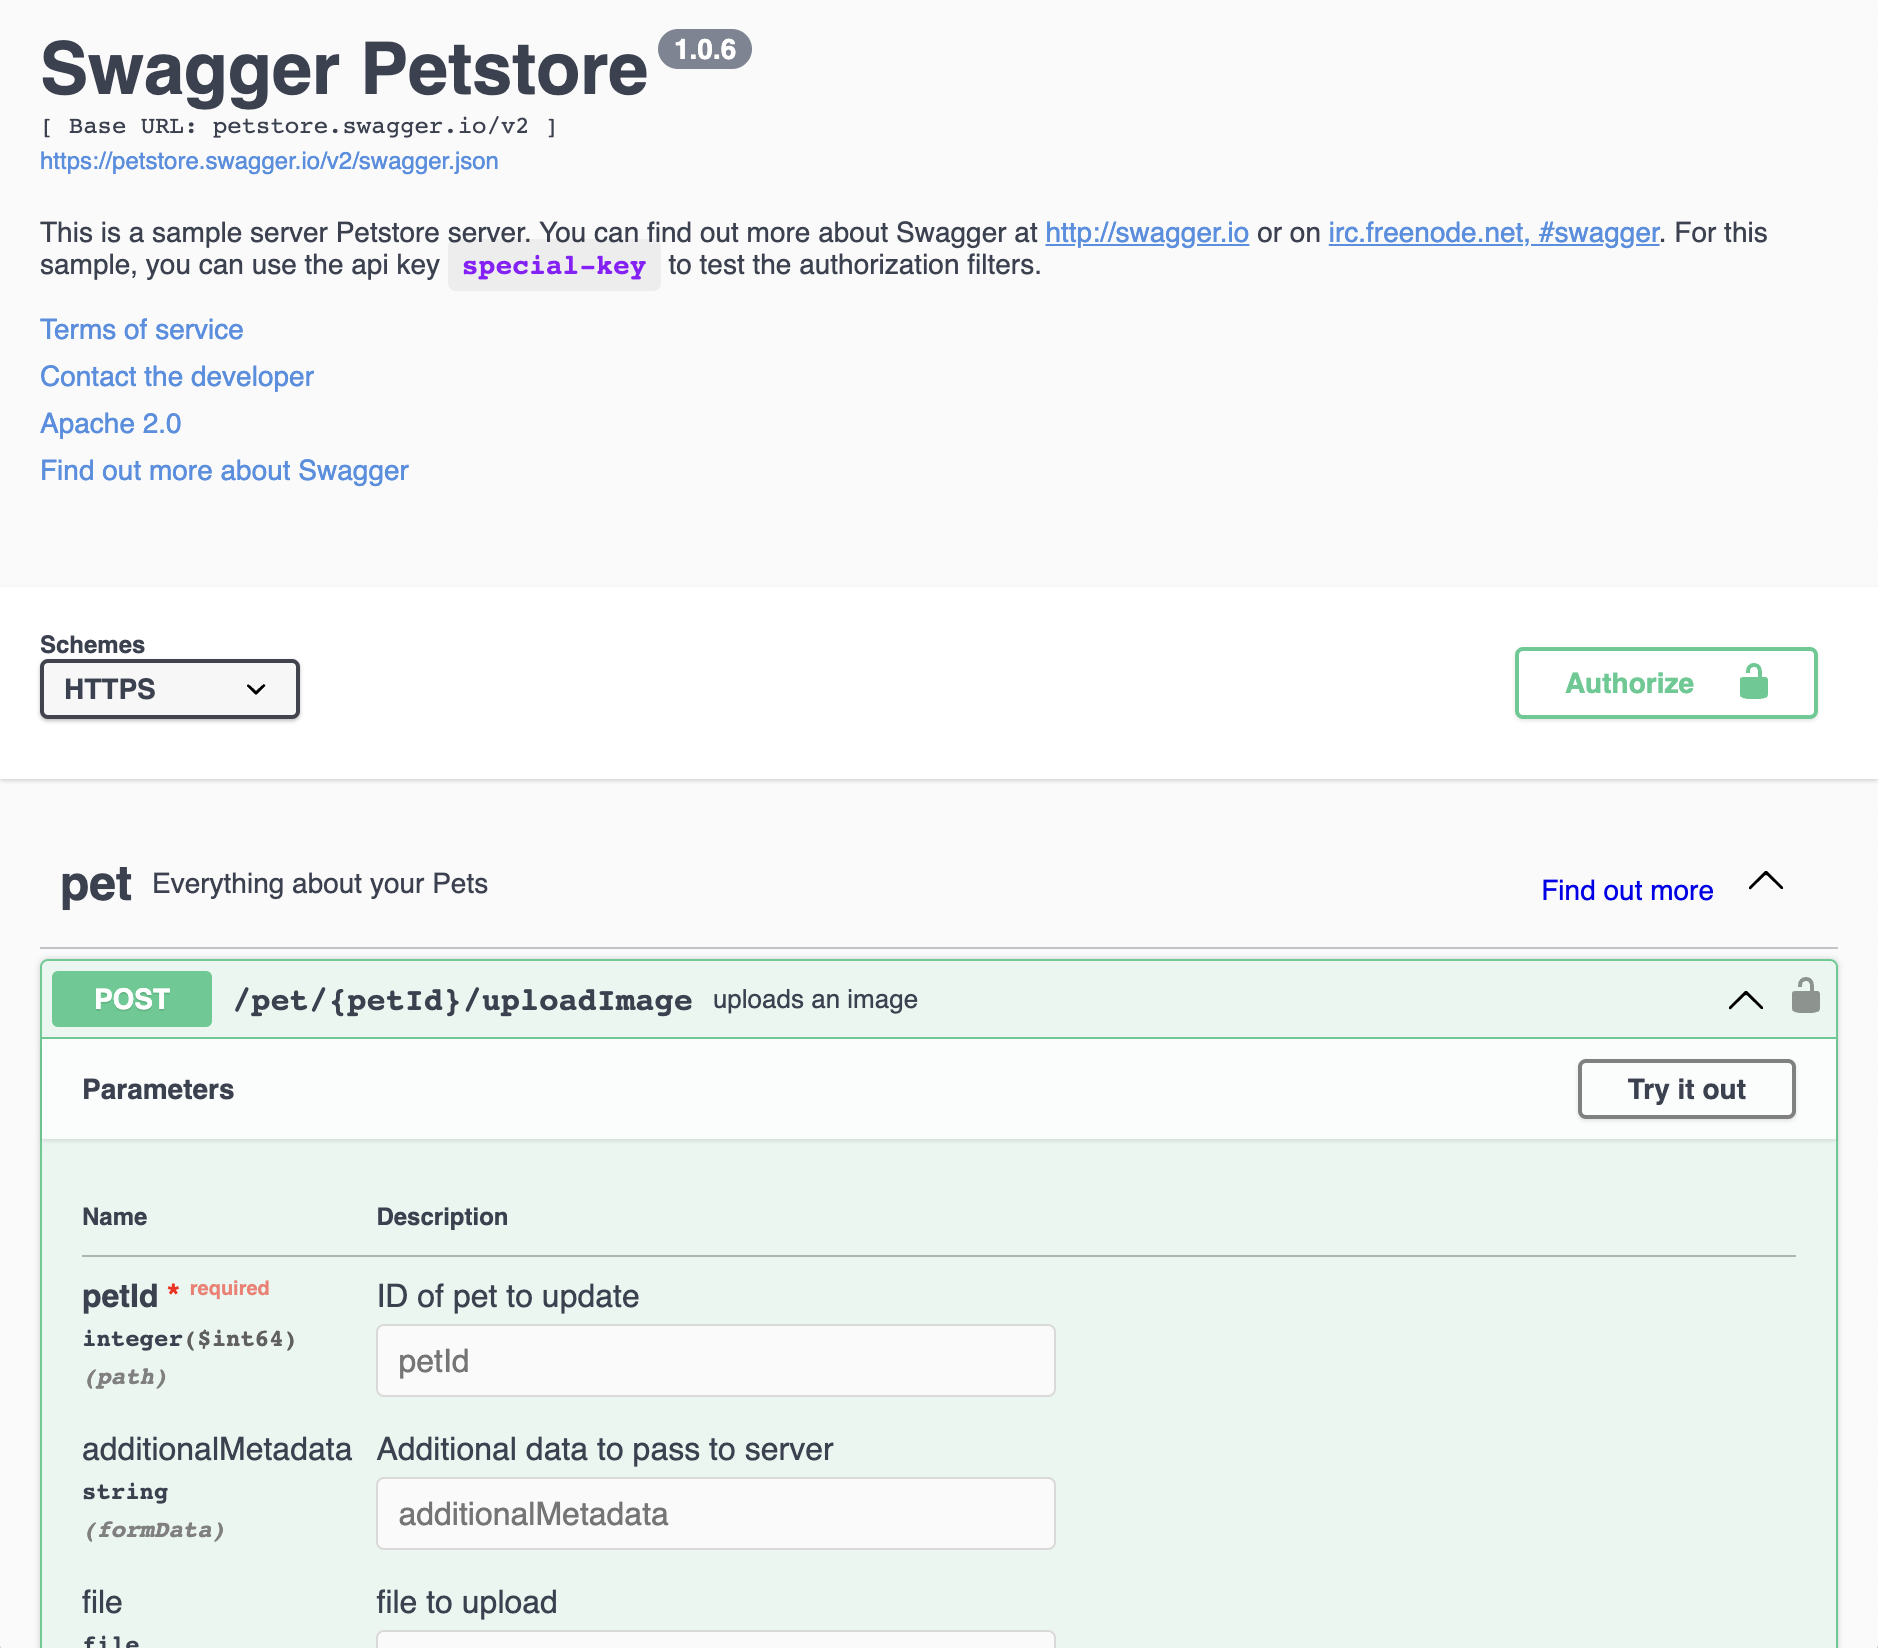 Screenshot of Swagger UI, a visual and interactive API documentation tool